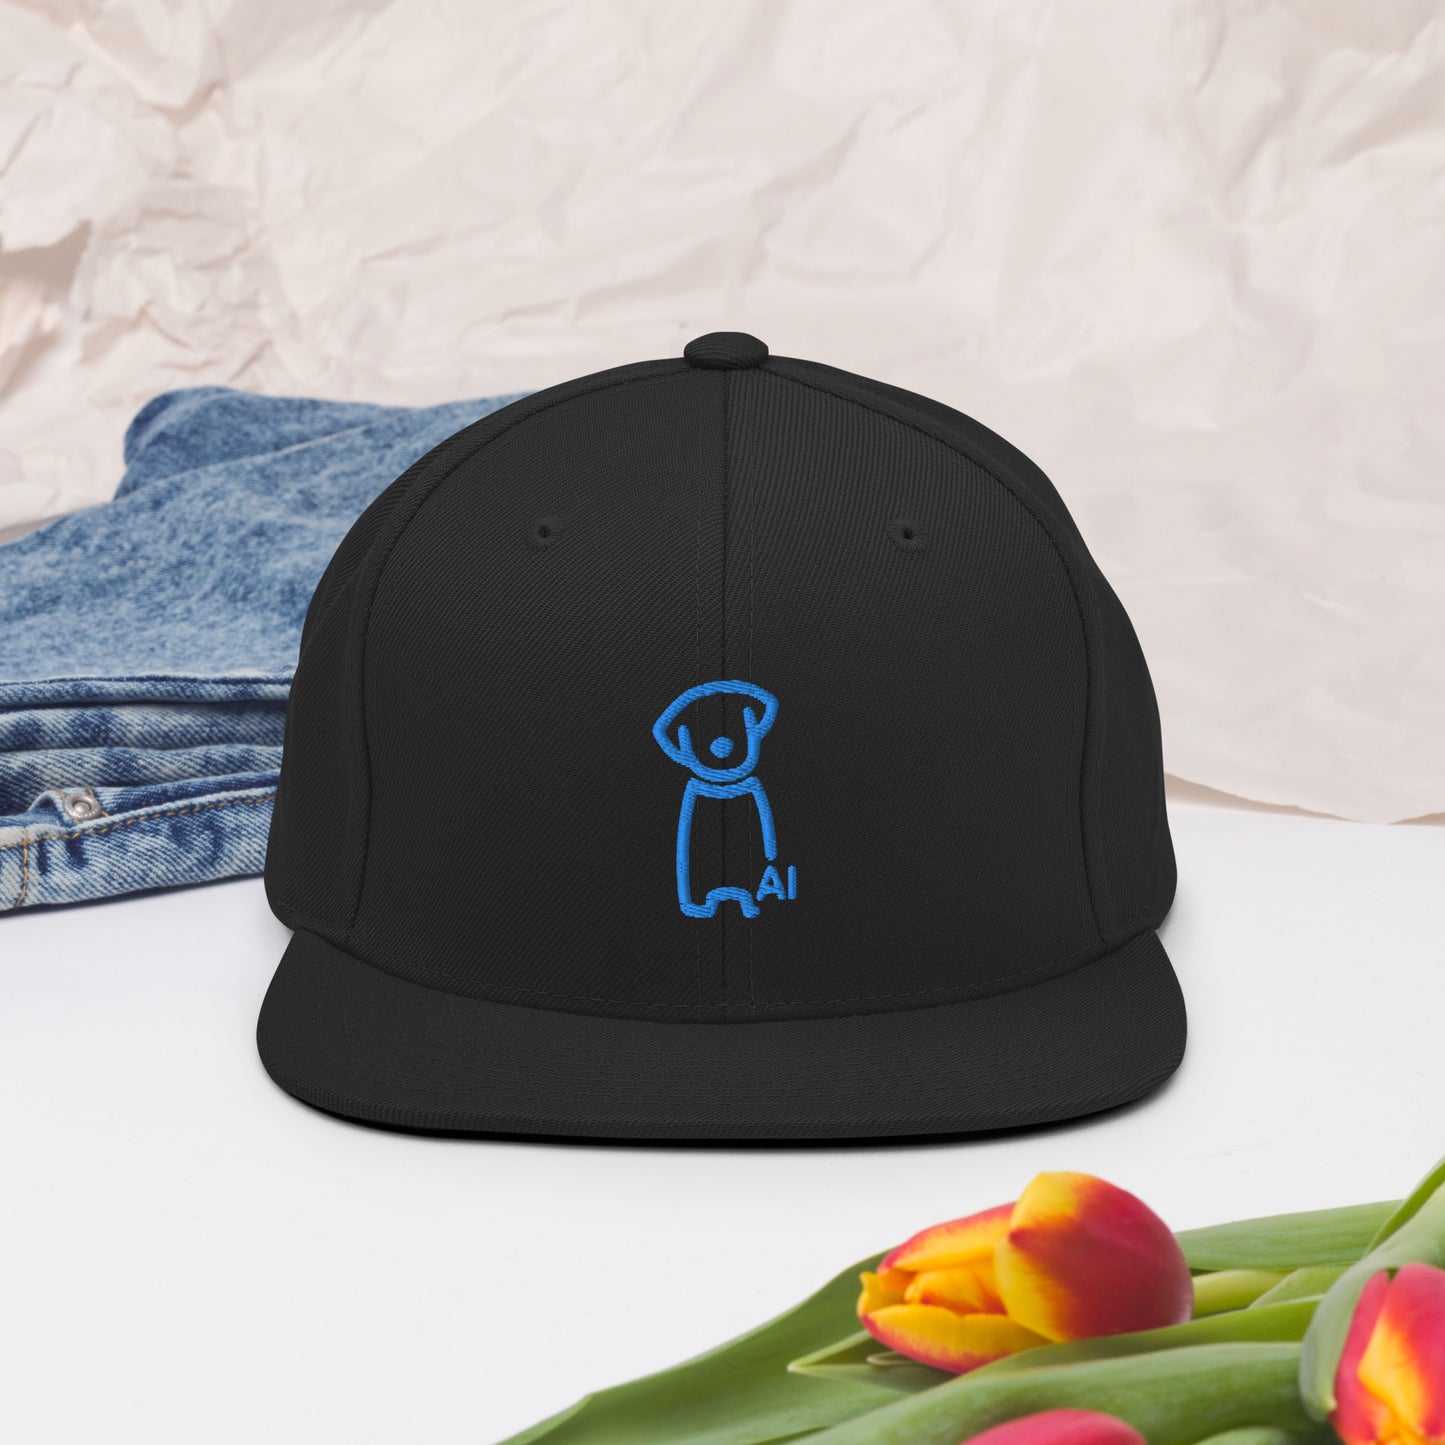 Snapback Hat ( #DibiFetchAI )